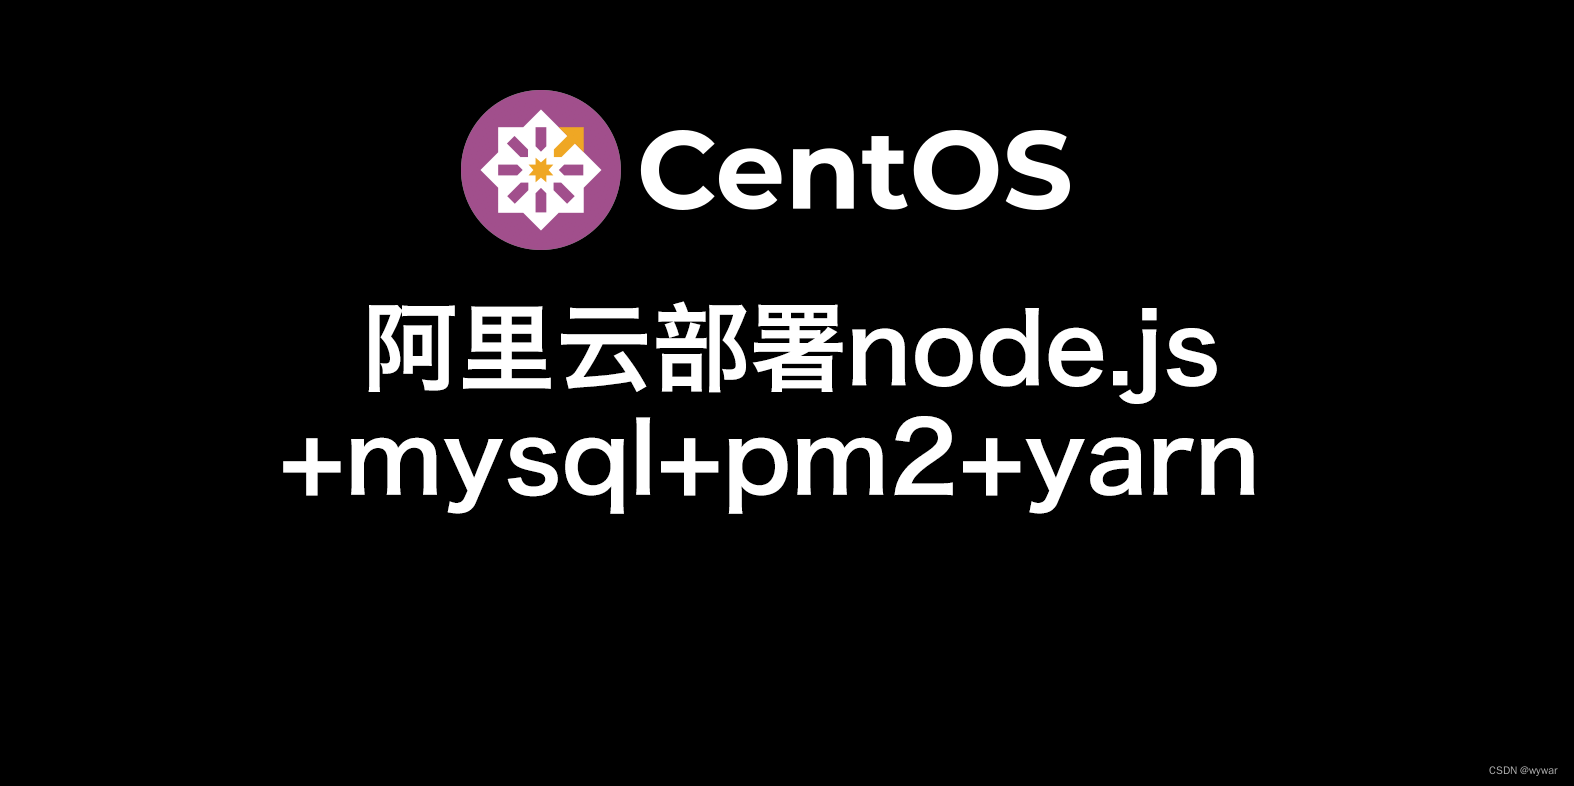 Alibaba cloud centos deploys node.js applications from 0